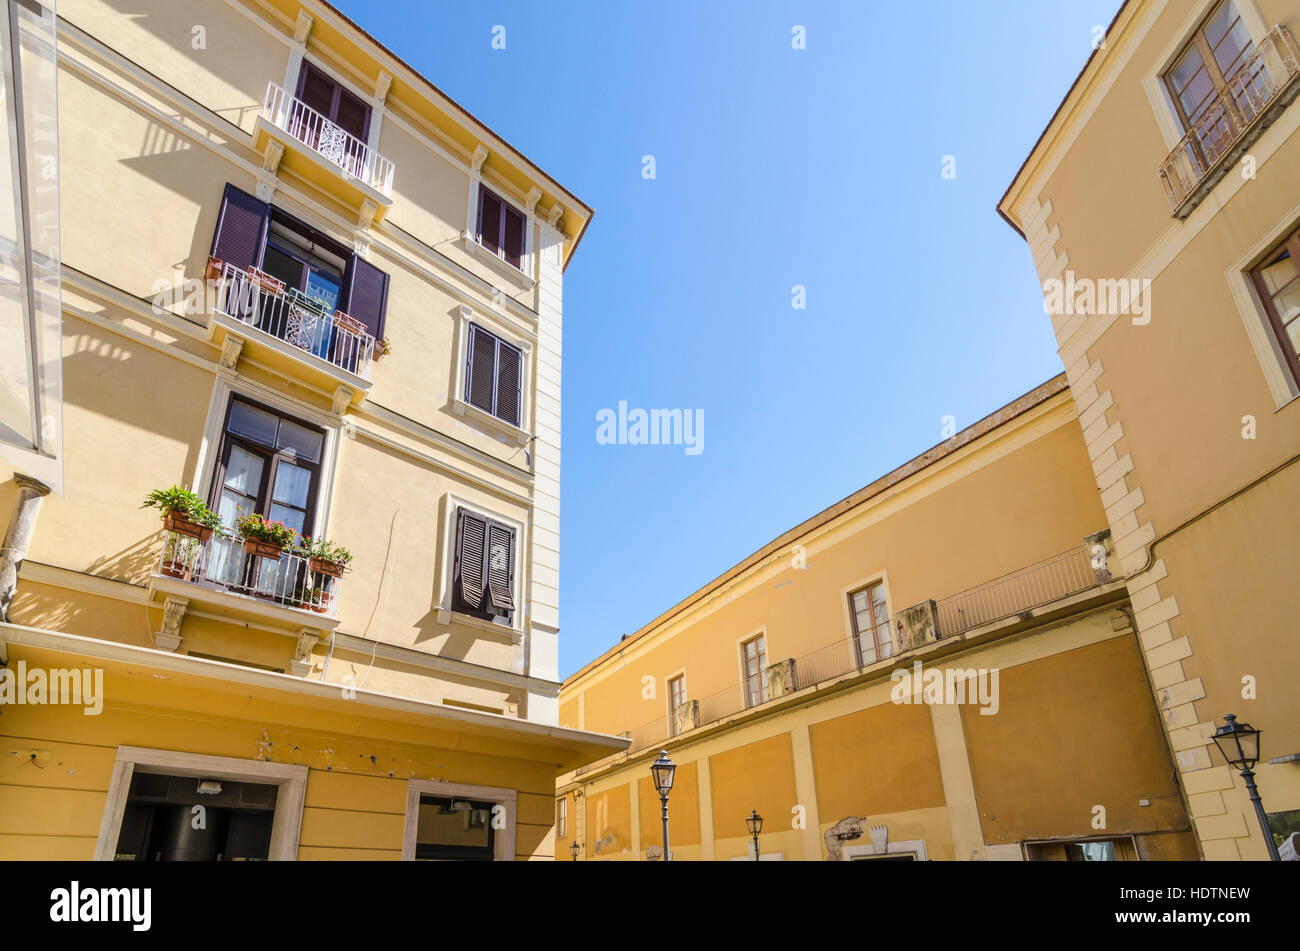 Traditional buildings on Via San Francesco, Sorrento, Italy Stock Photo